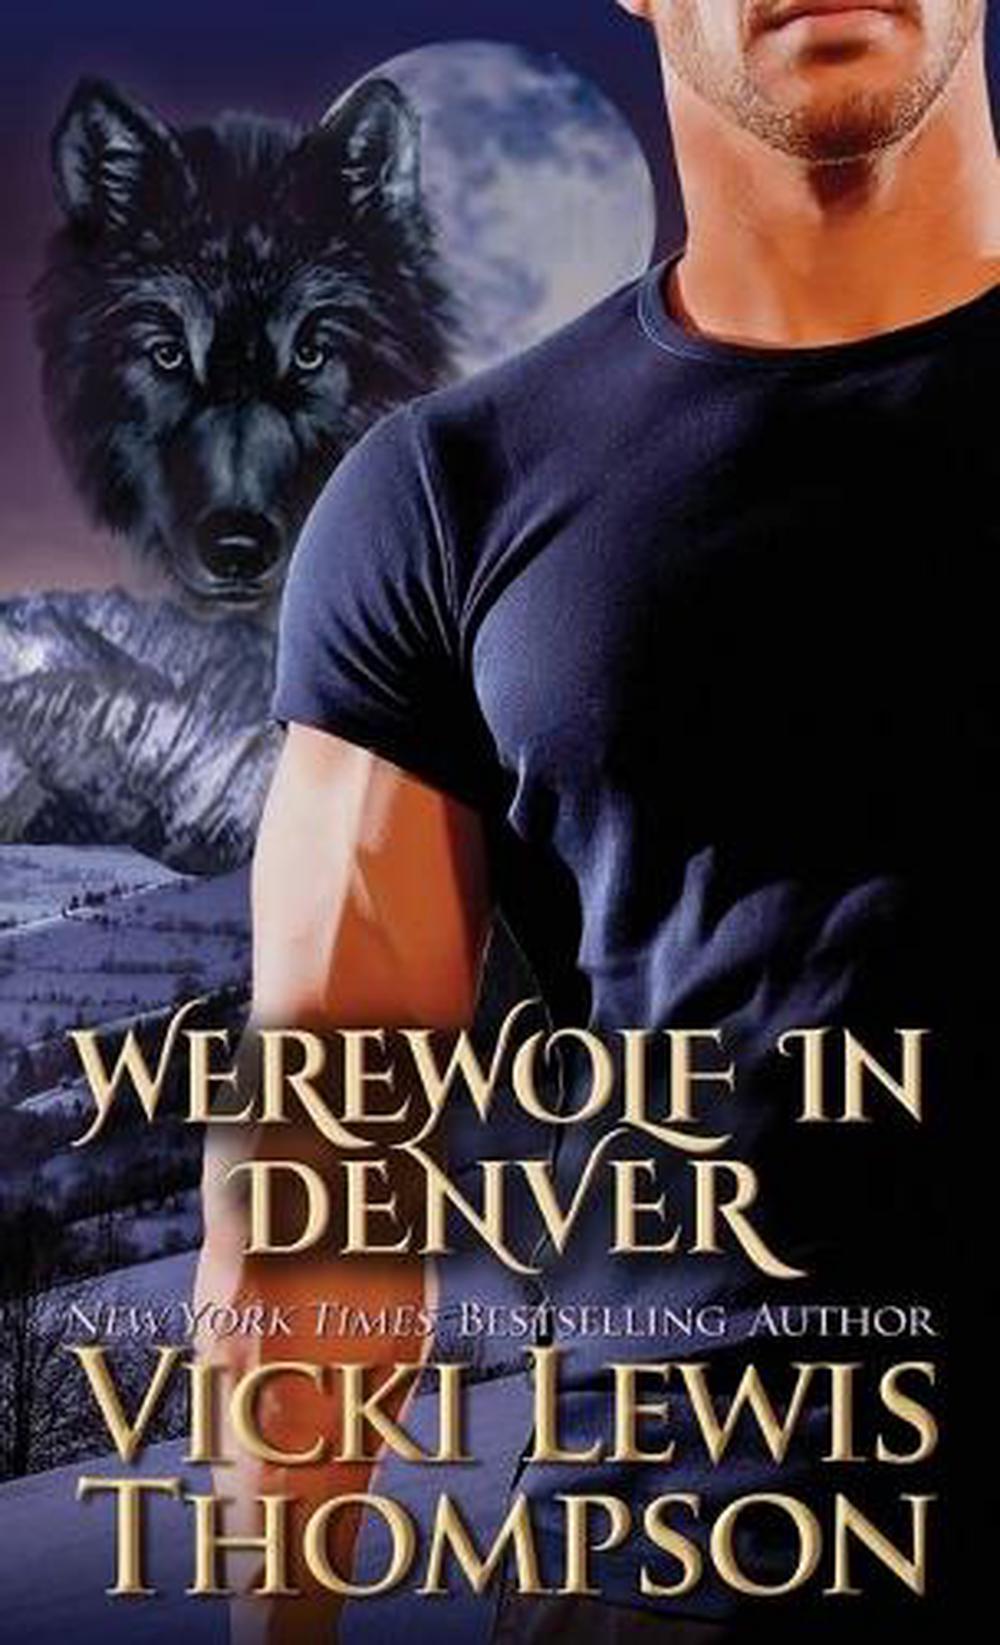 Werewolf in Alaska by Vicki Lewis Thompson